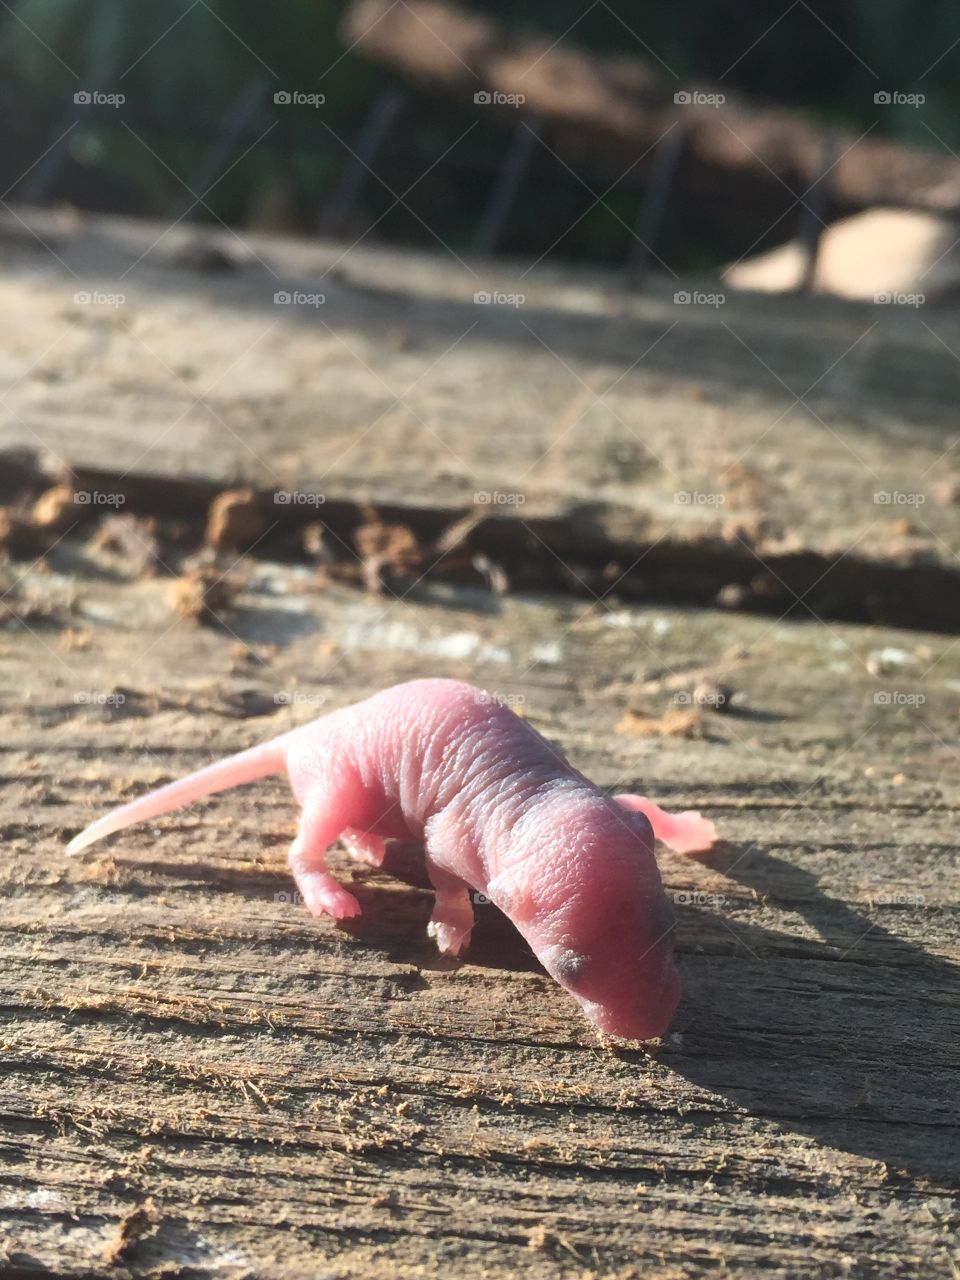 Stranded infant field mouse